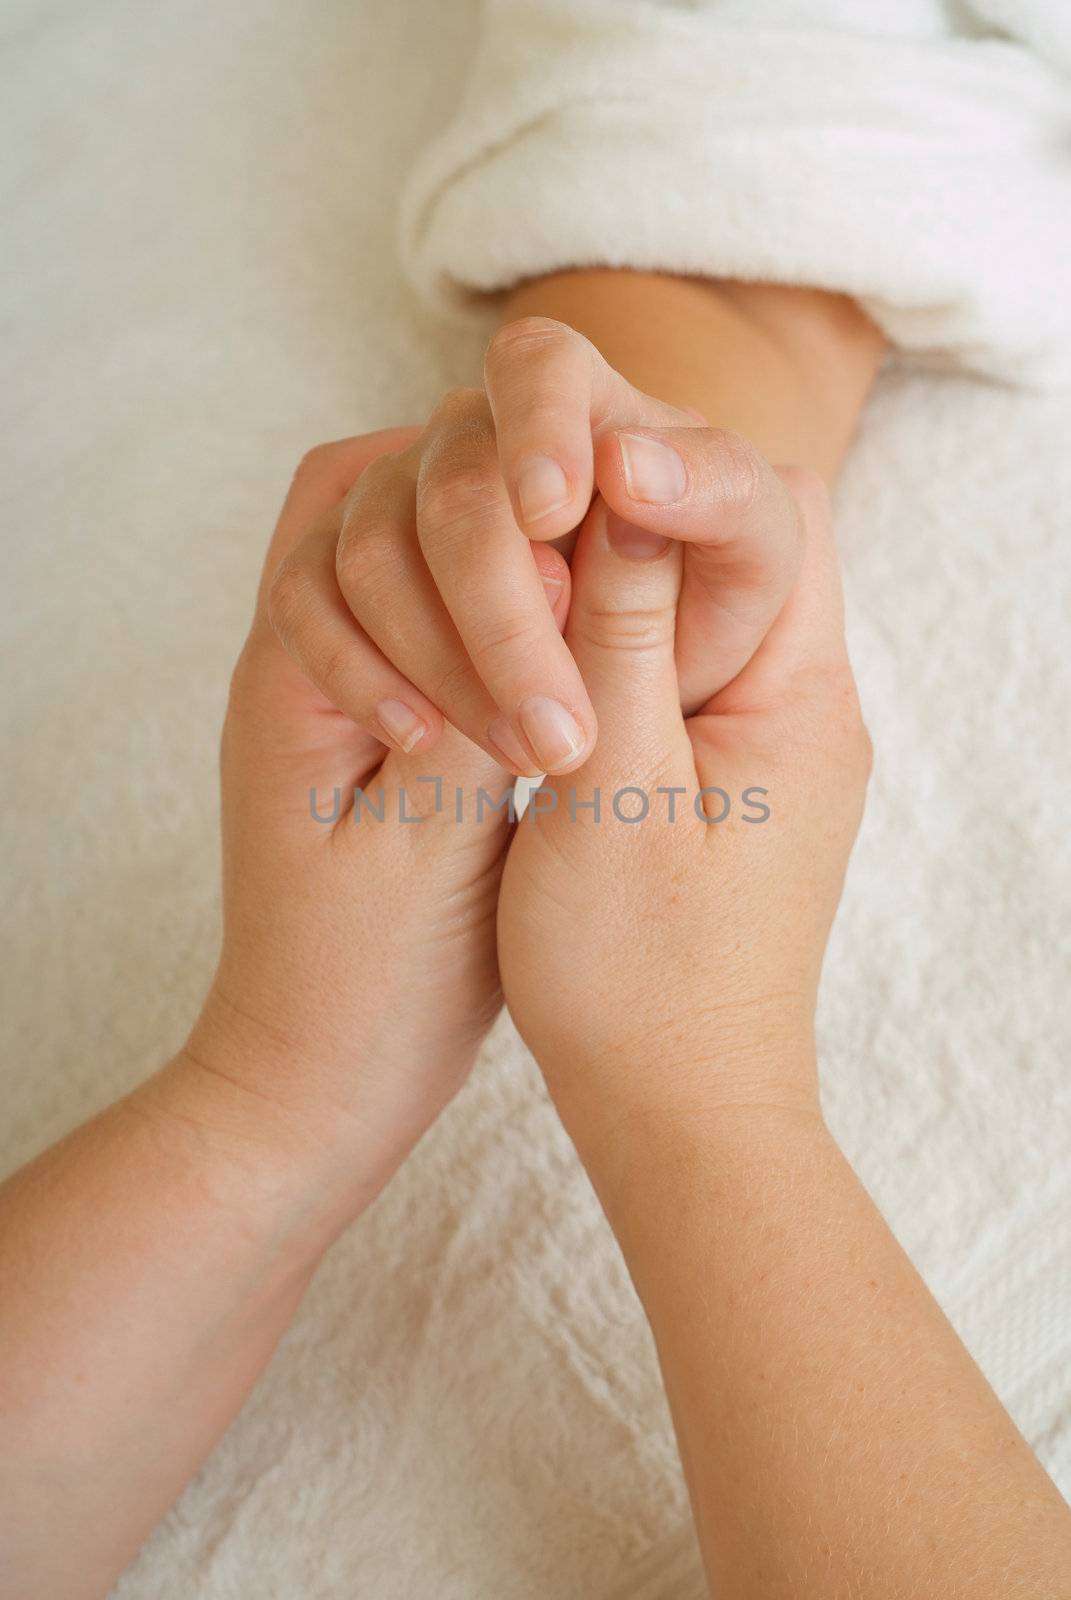 Beauty therapist hands massaging hands or manicure